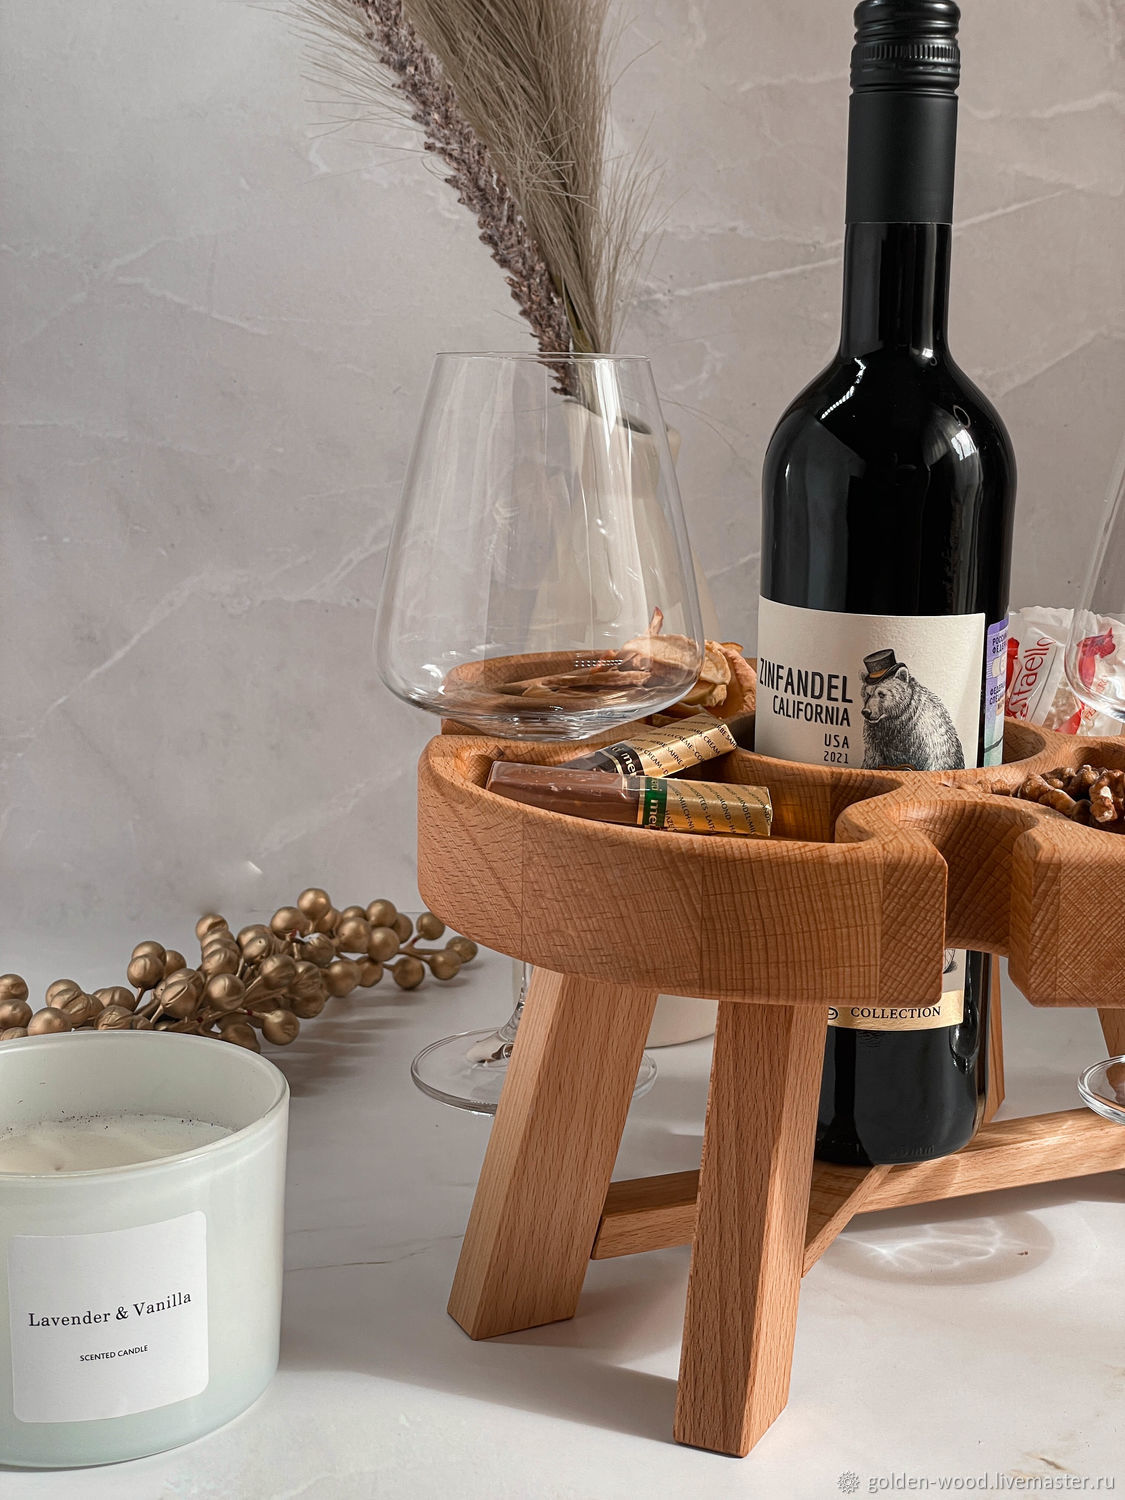 Creed wood винный столик